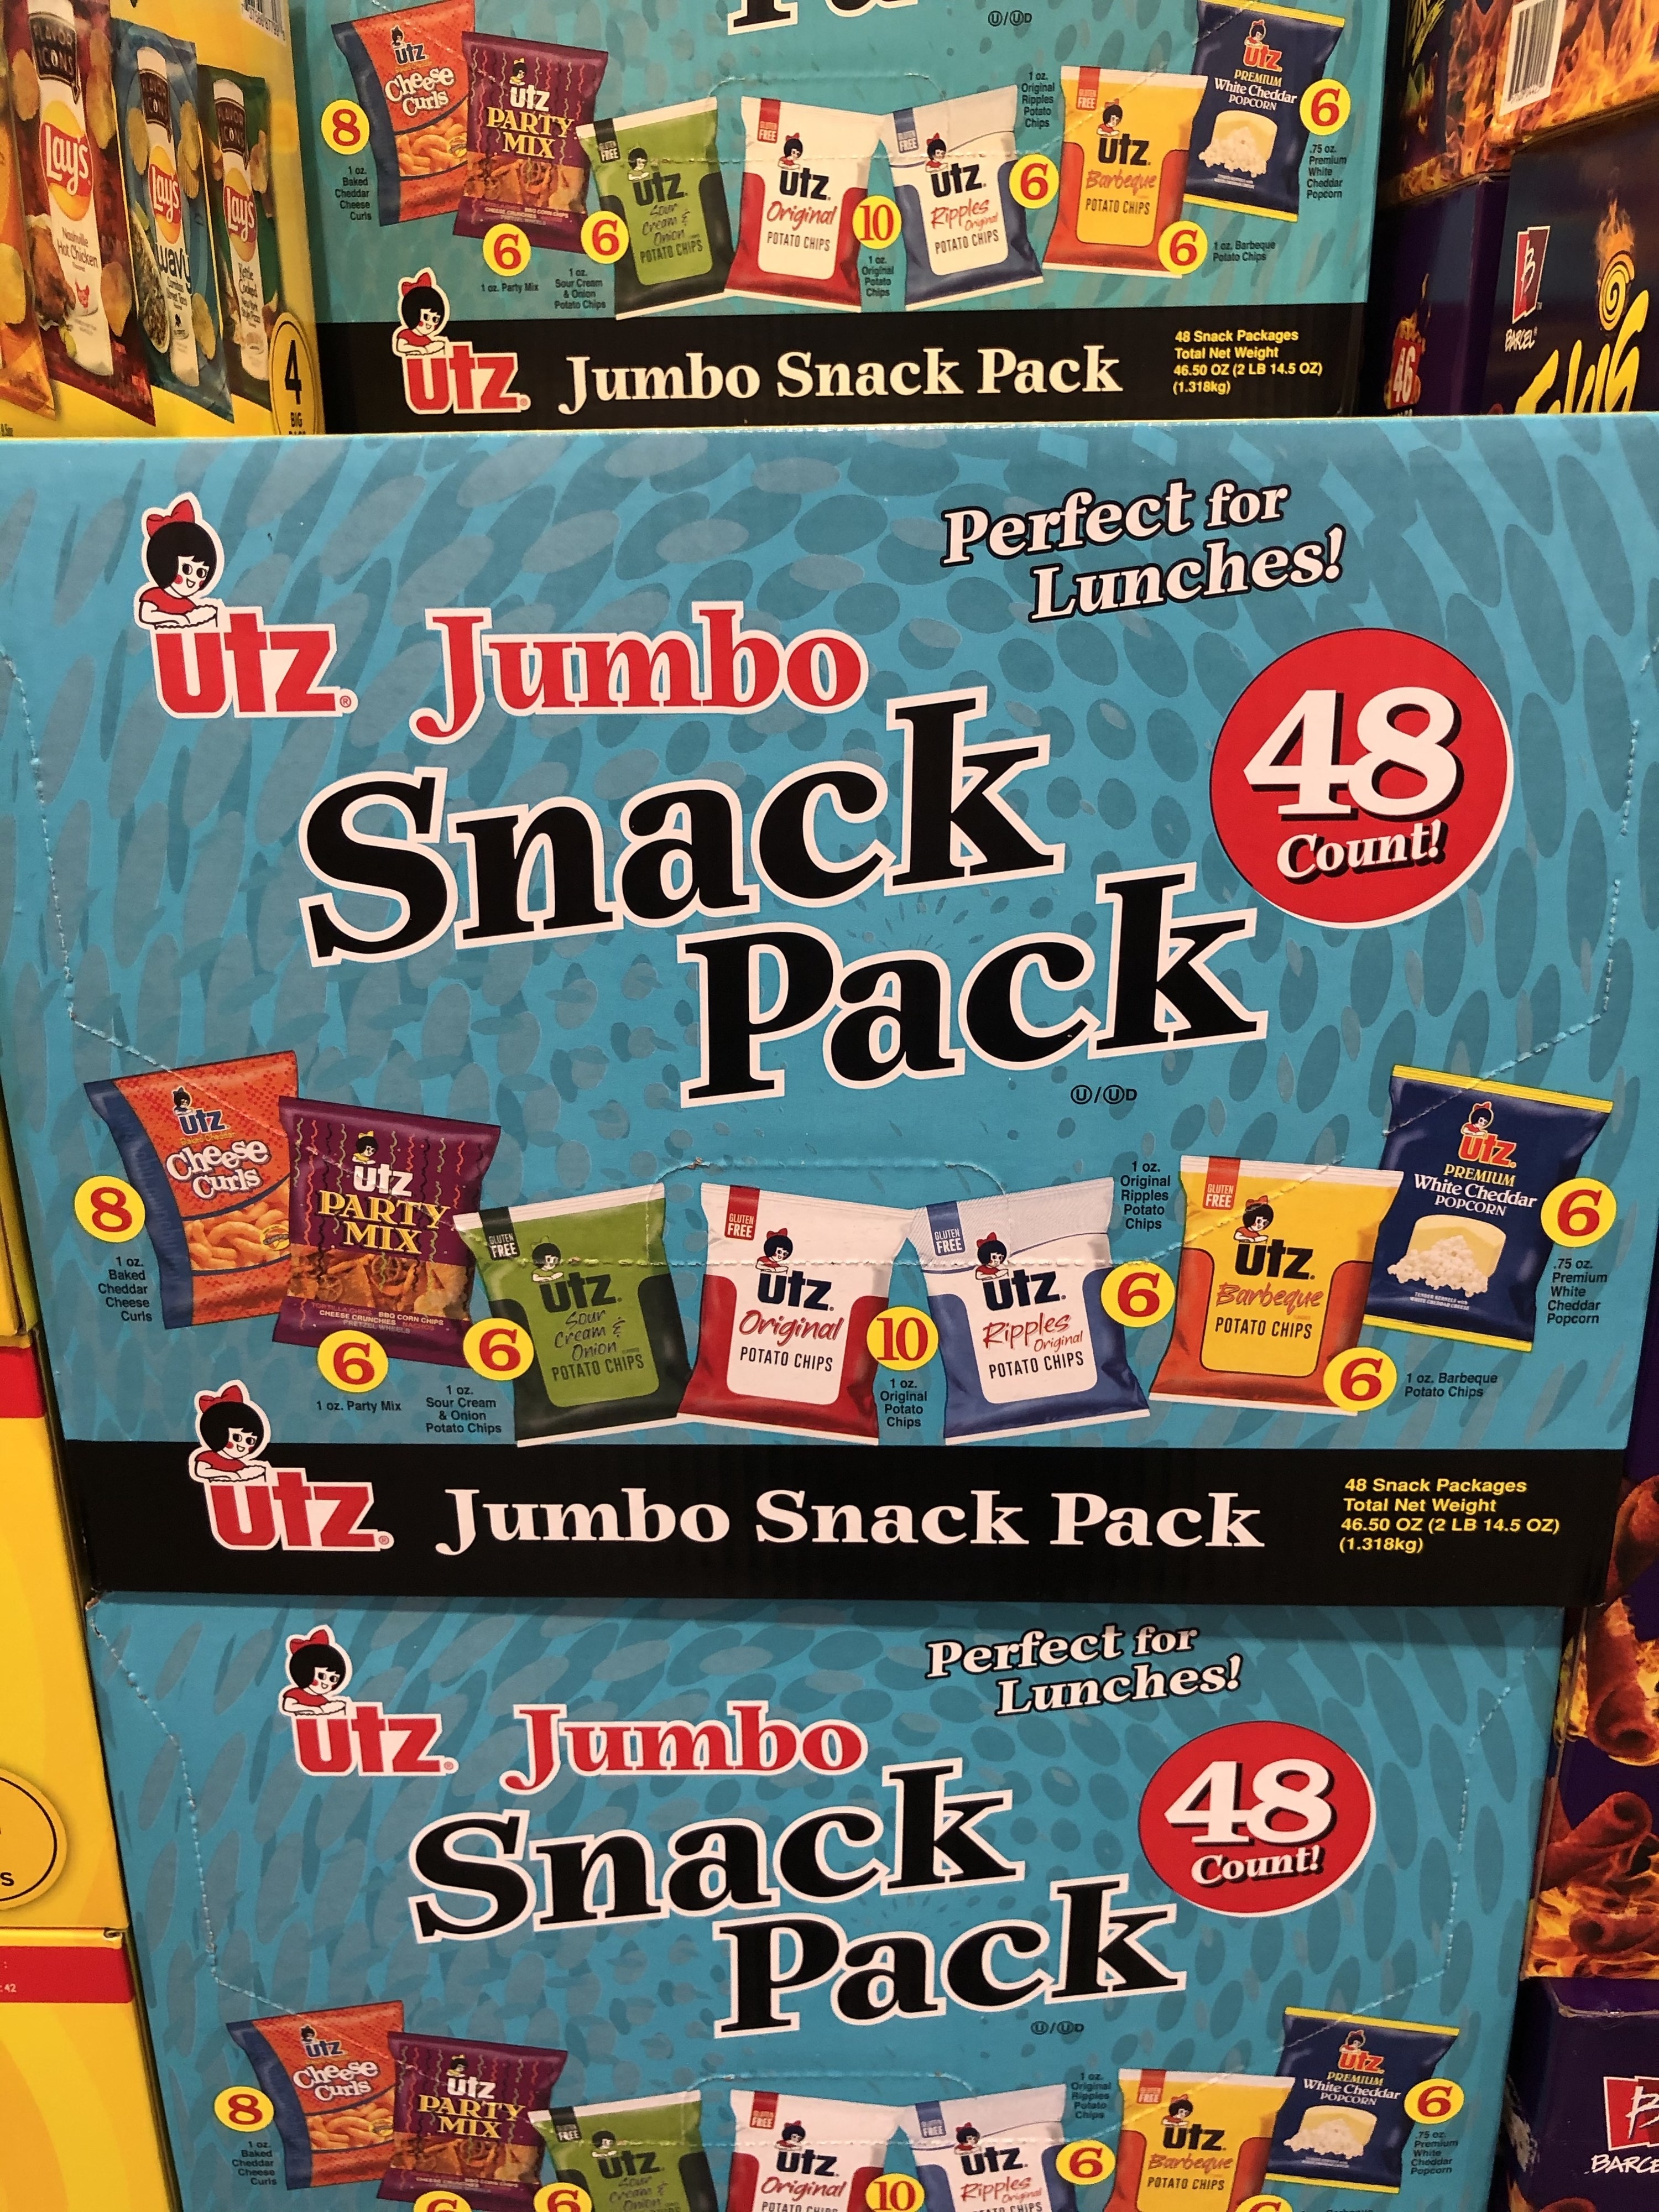 A jumbo snack pack box of Utz chips